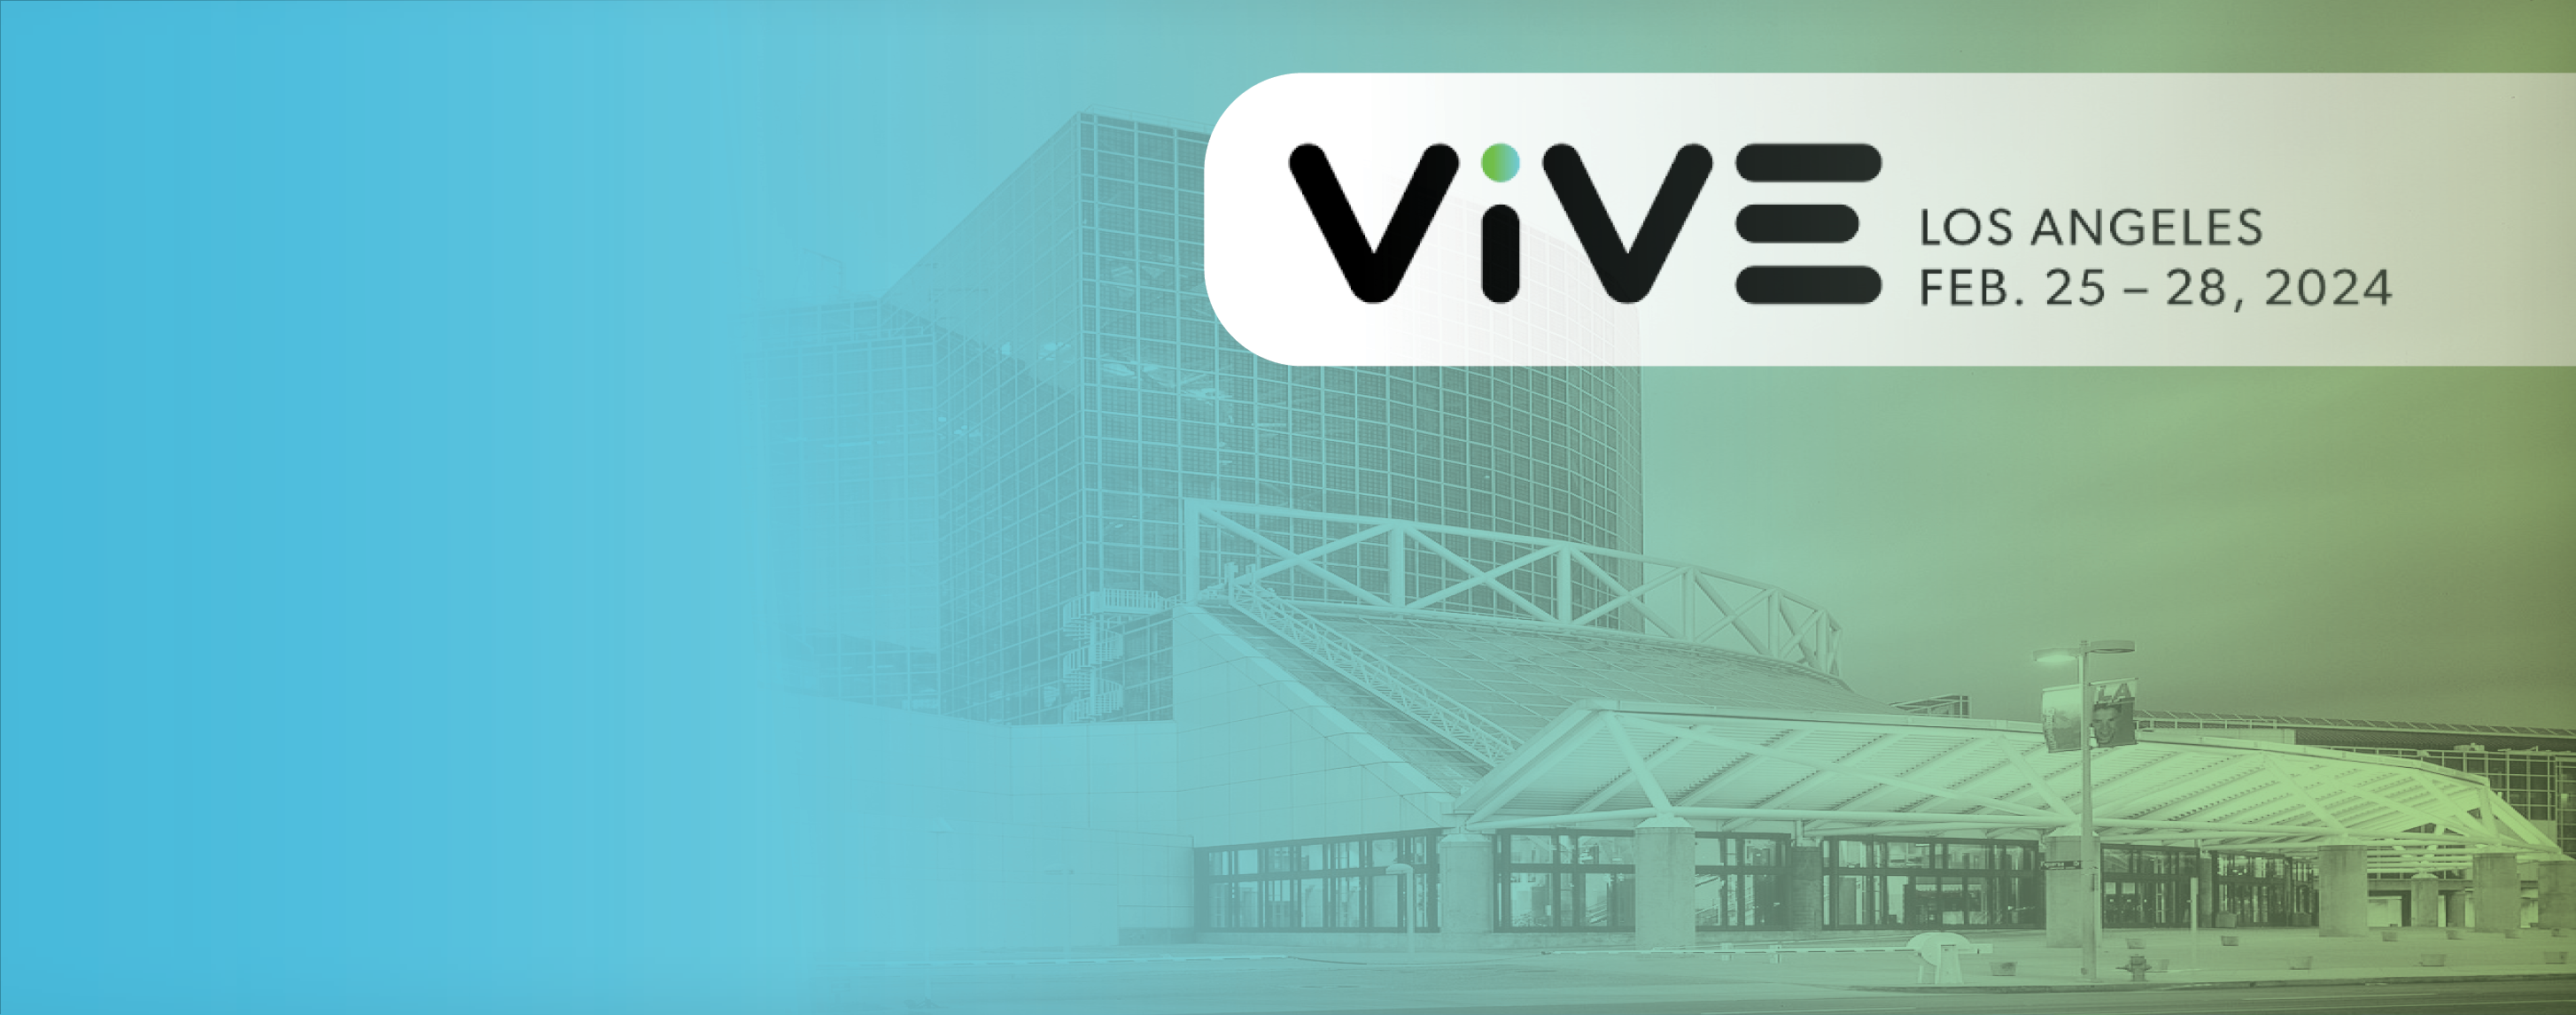 TeleVox Showcases Patient Relationship Management Platform with SMART SMS at ViVE 2024